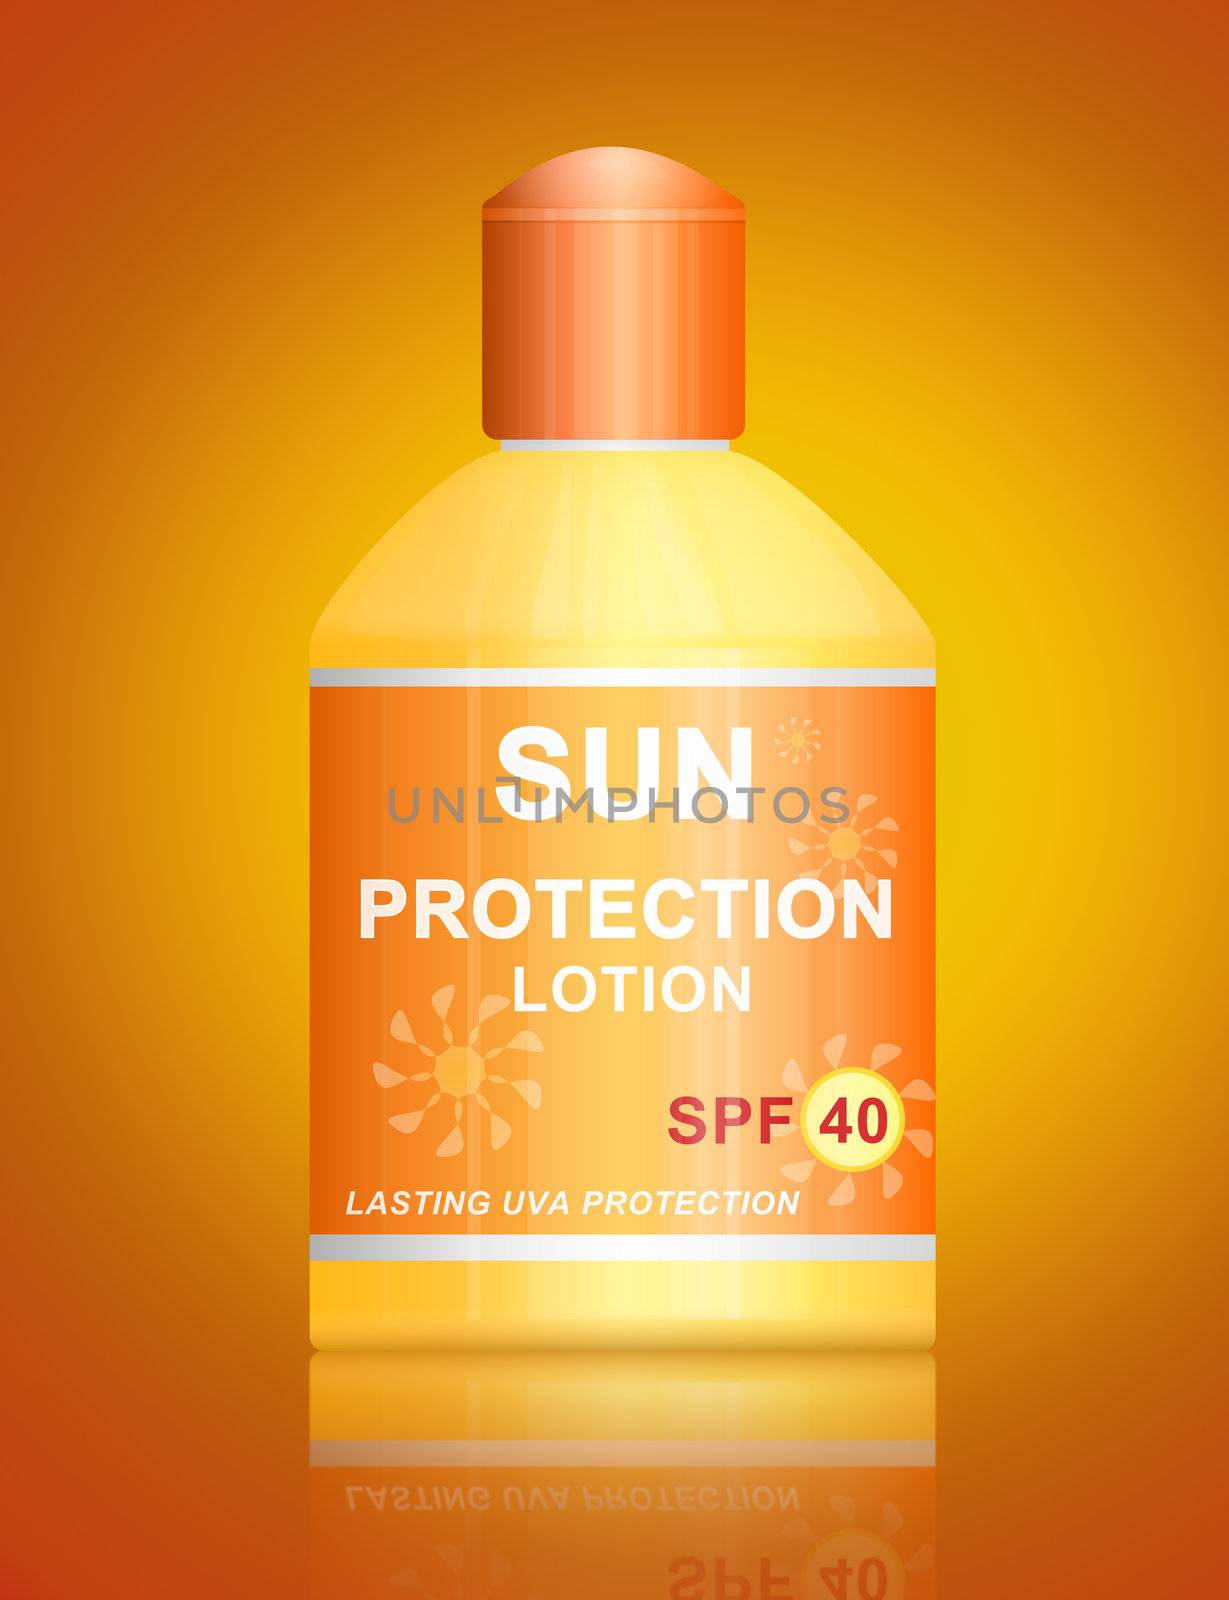 Illustration depicting a single uva SPF 40 sun protection lotion bottle arranged over vibrant golden background.